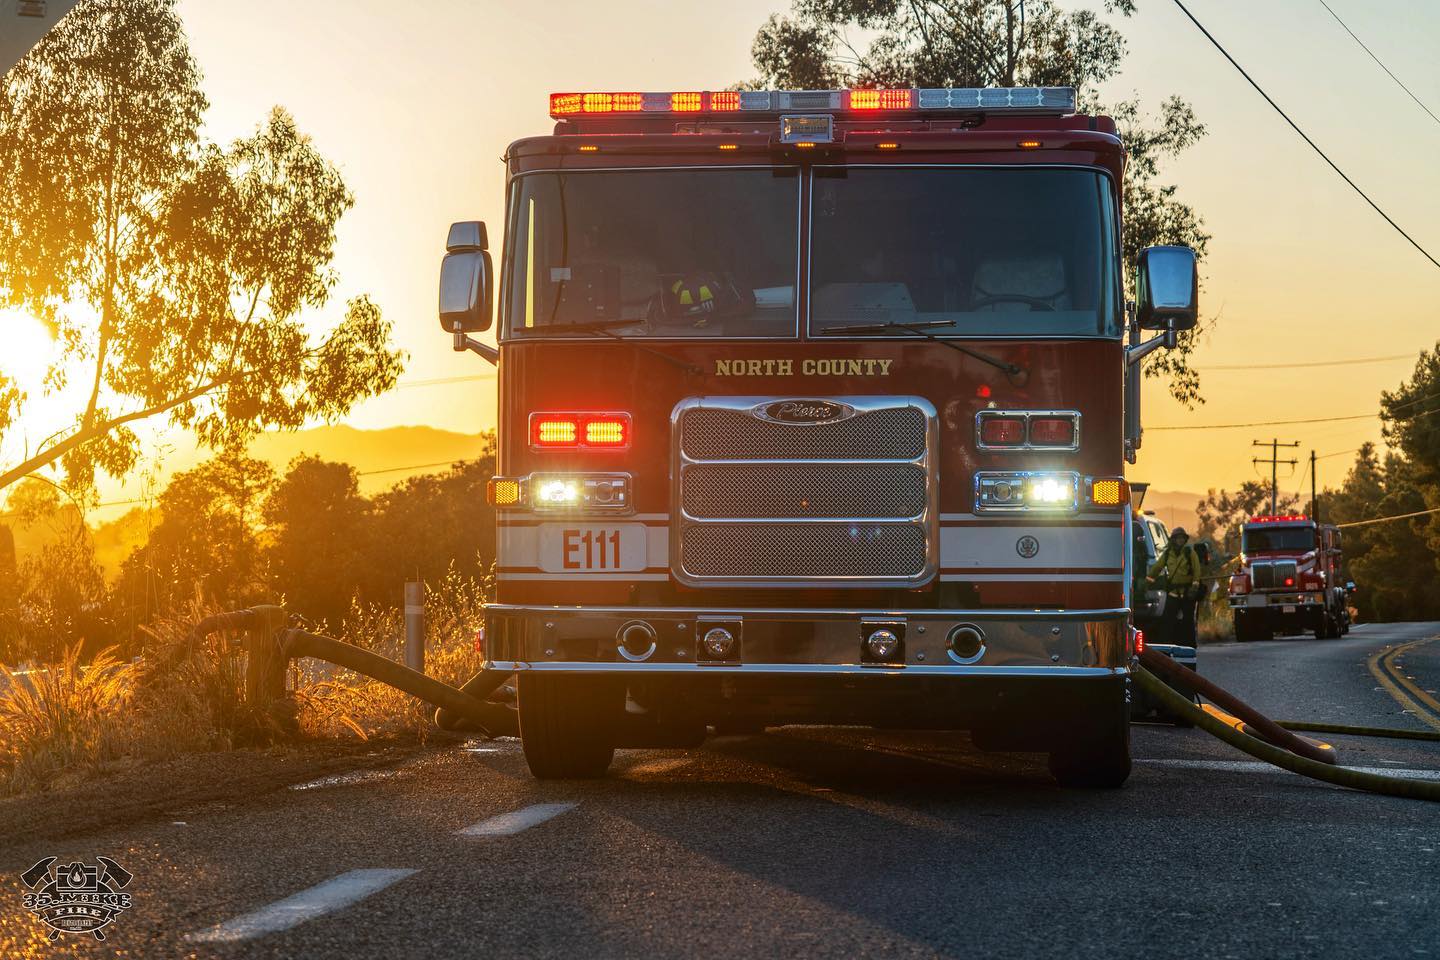 Four New Brush Engines – San Bernardino County Fire Protection District